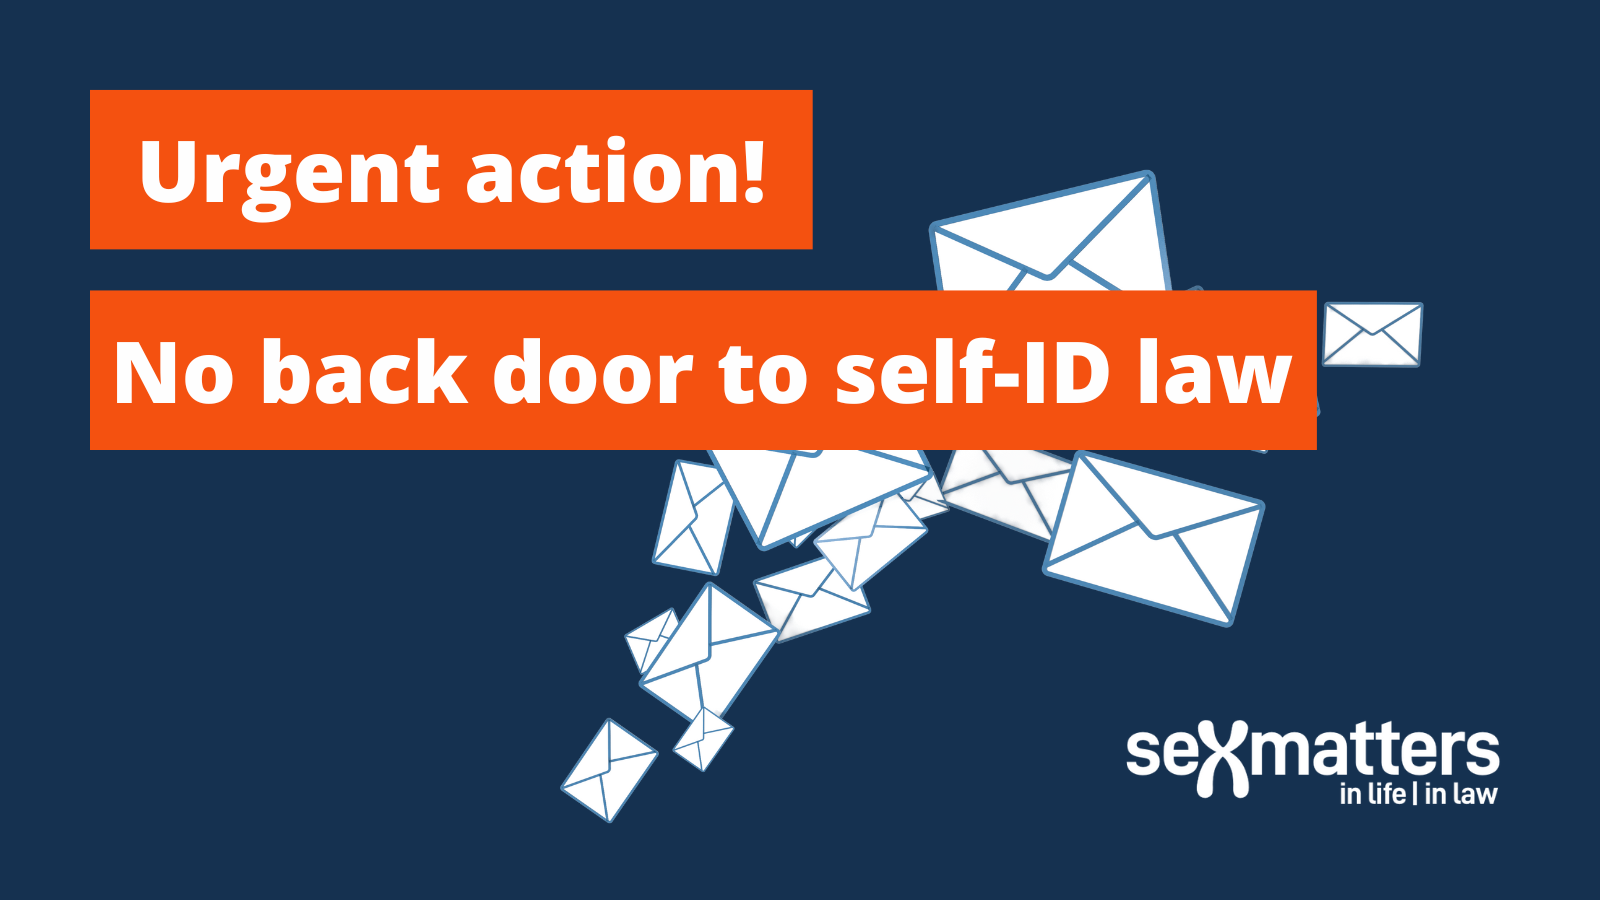 Urgent action! No back door to self-ID law